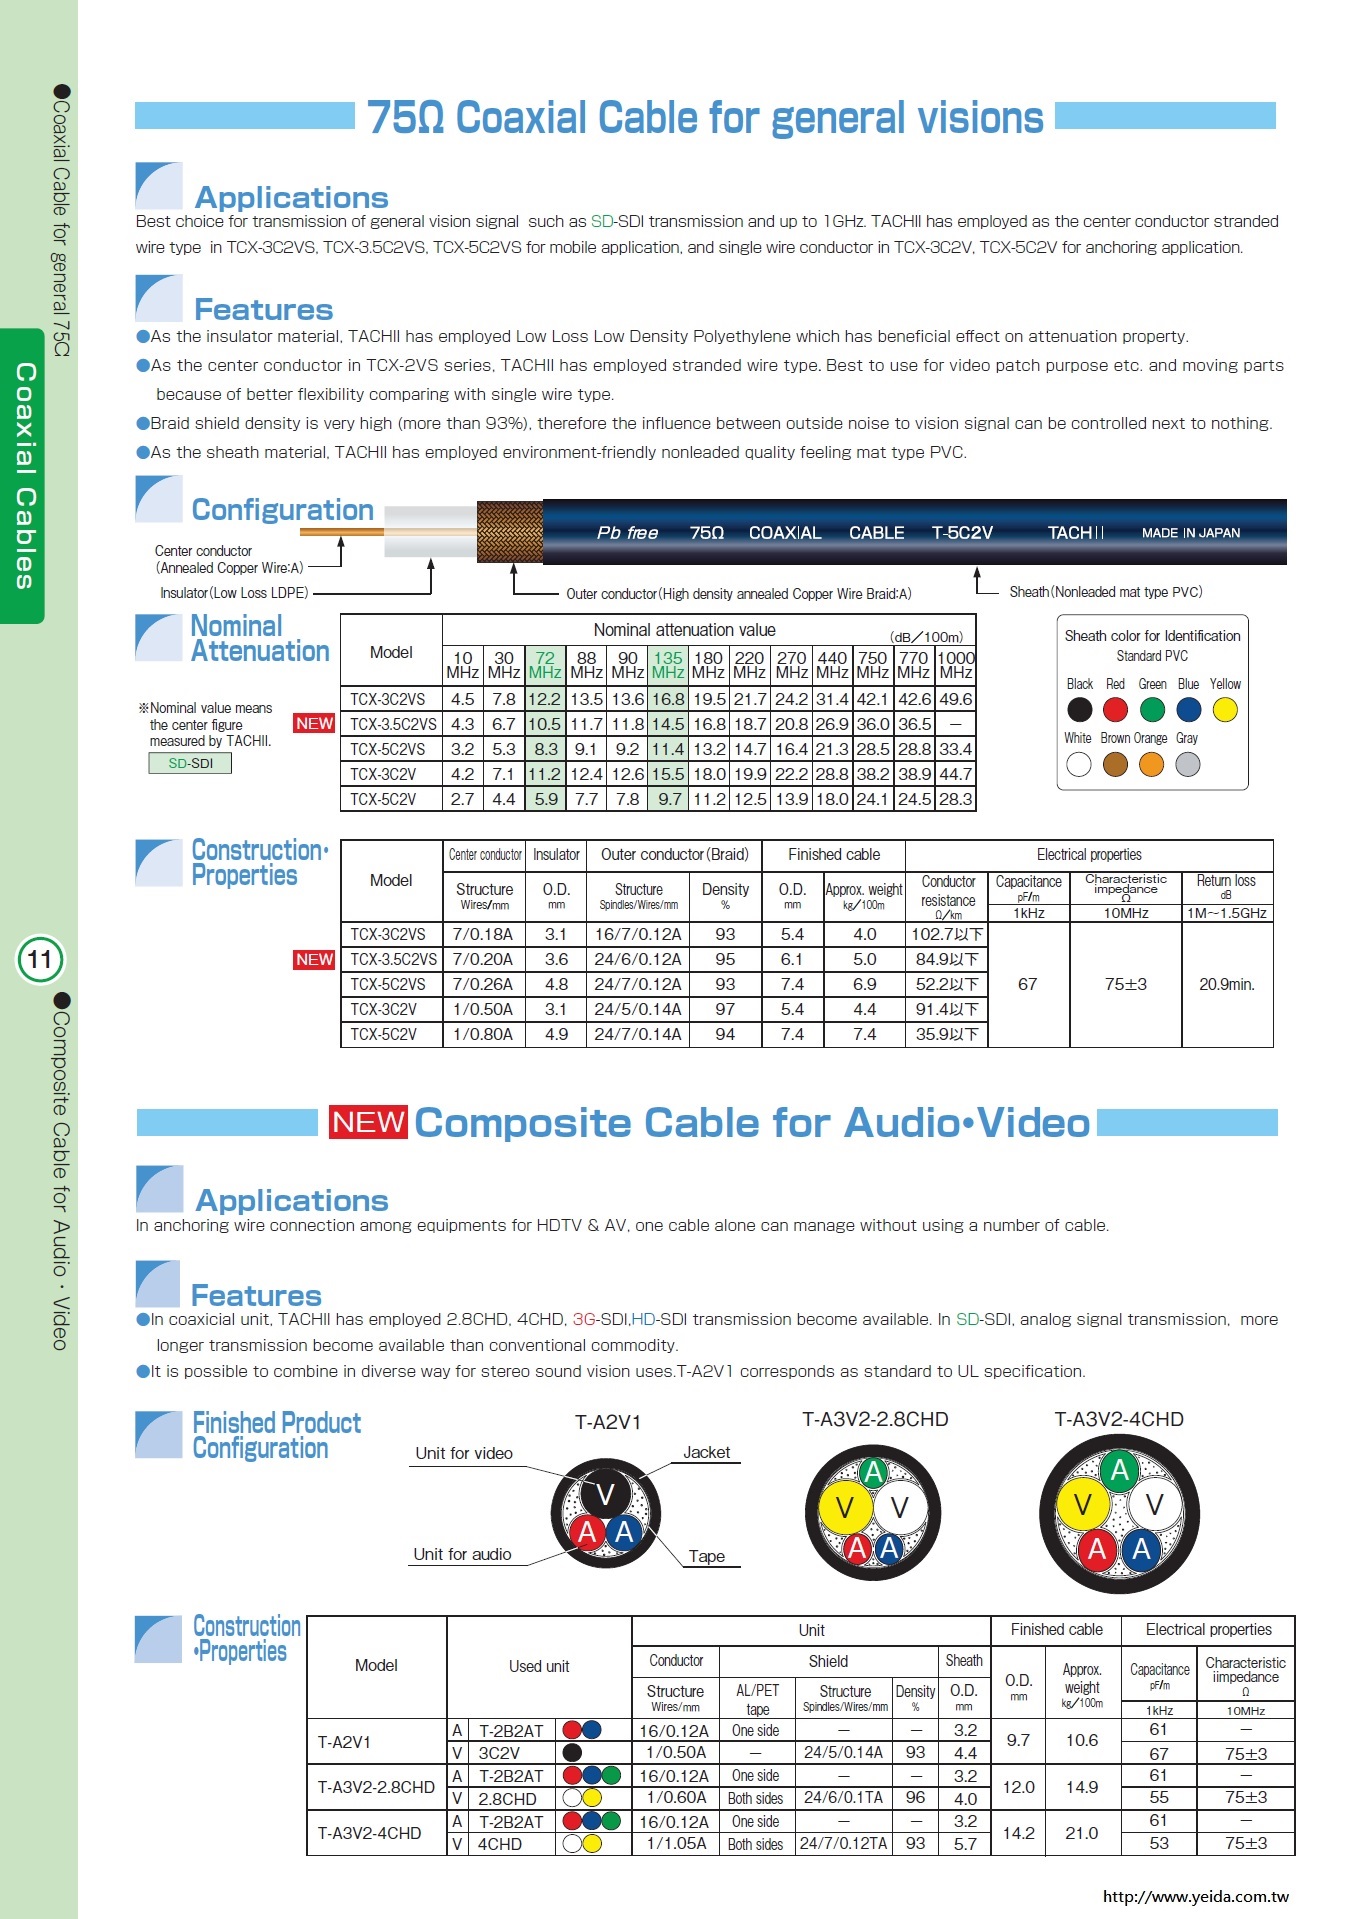 TACHII, T-A2V1, Composite Cable for 3G-SDI, HDTV, Audio, Video 優質廣播系統數位聲音影像傳輸用複合式電纜線產品圖